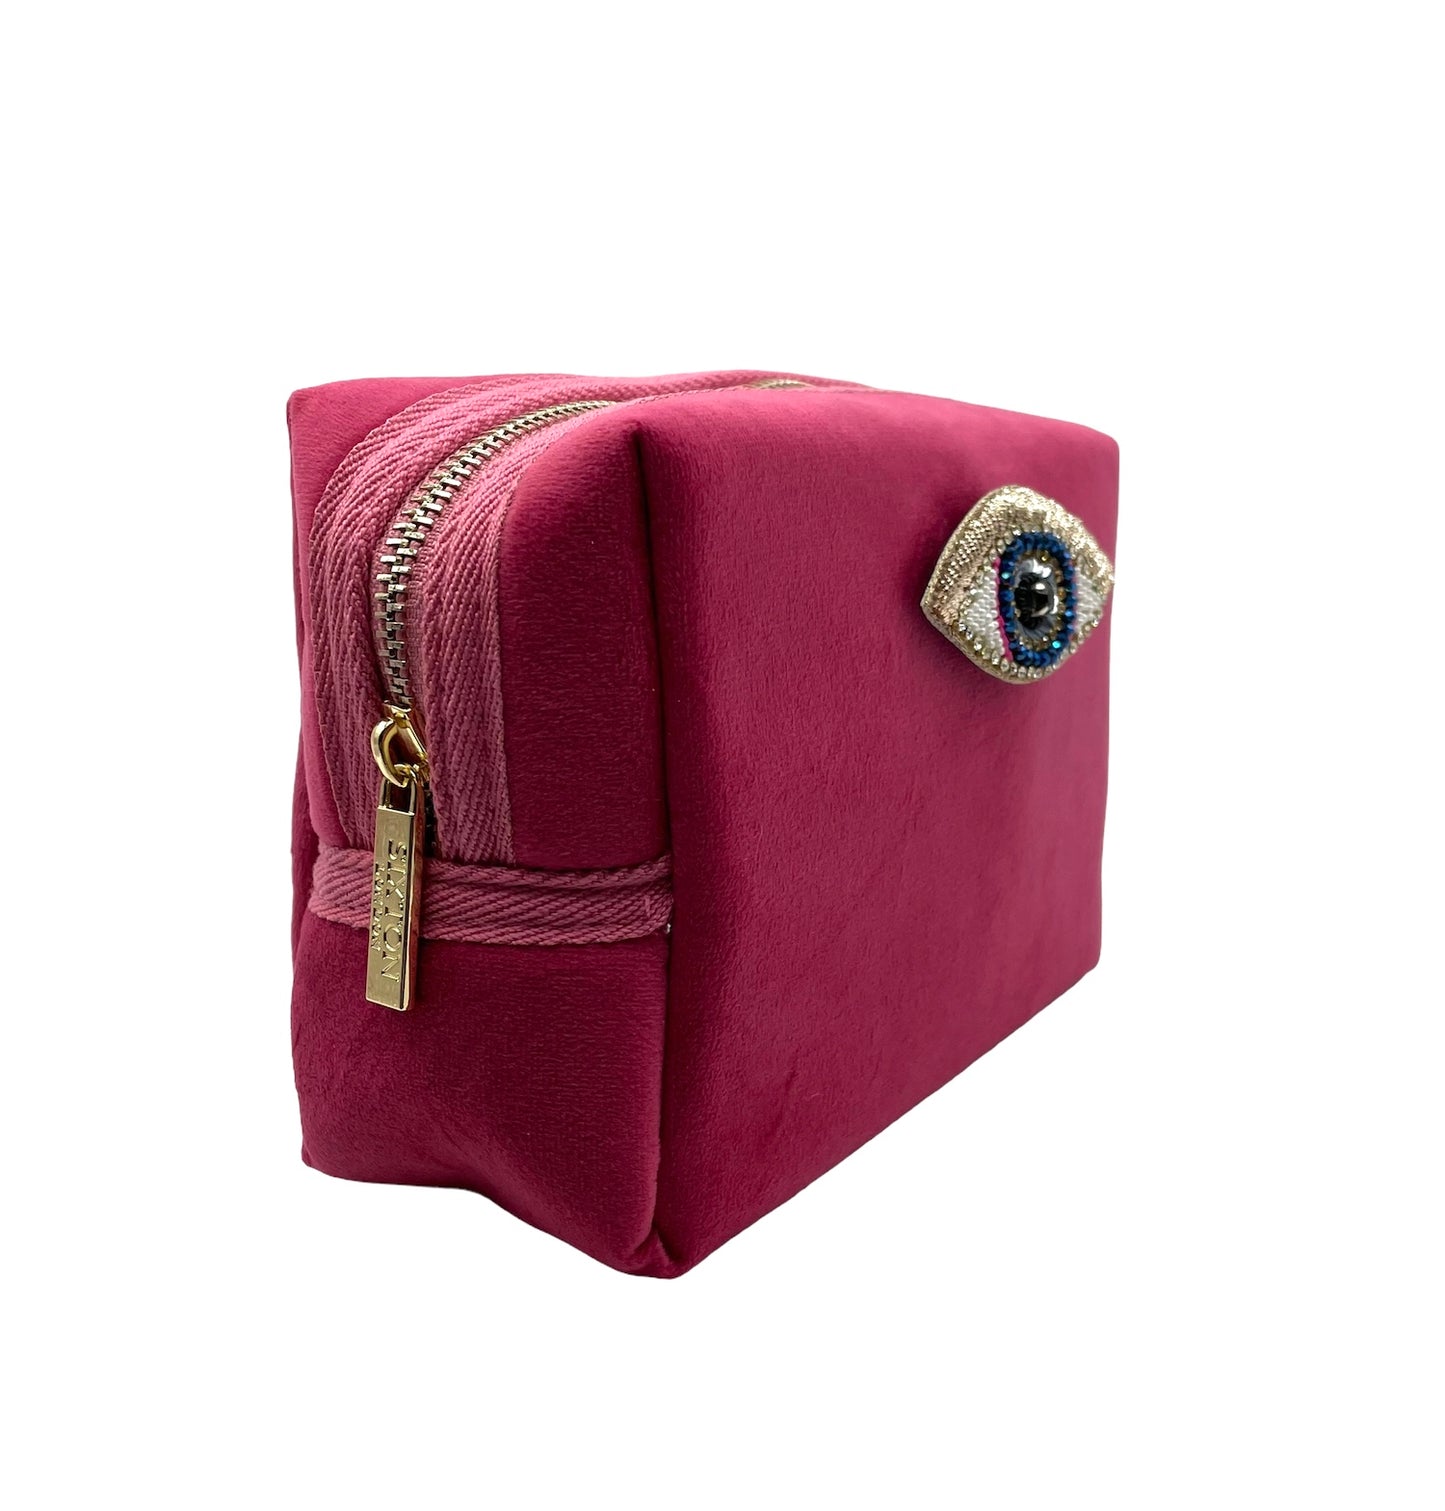 Bright pink make-up bag & golden eyes pin - recycled velvet